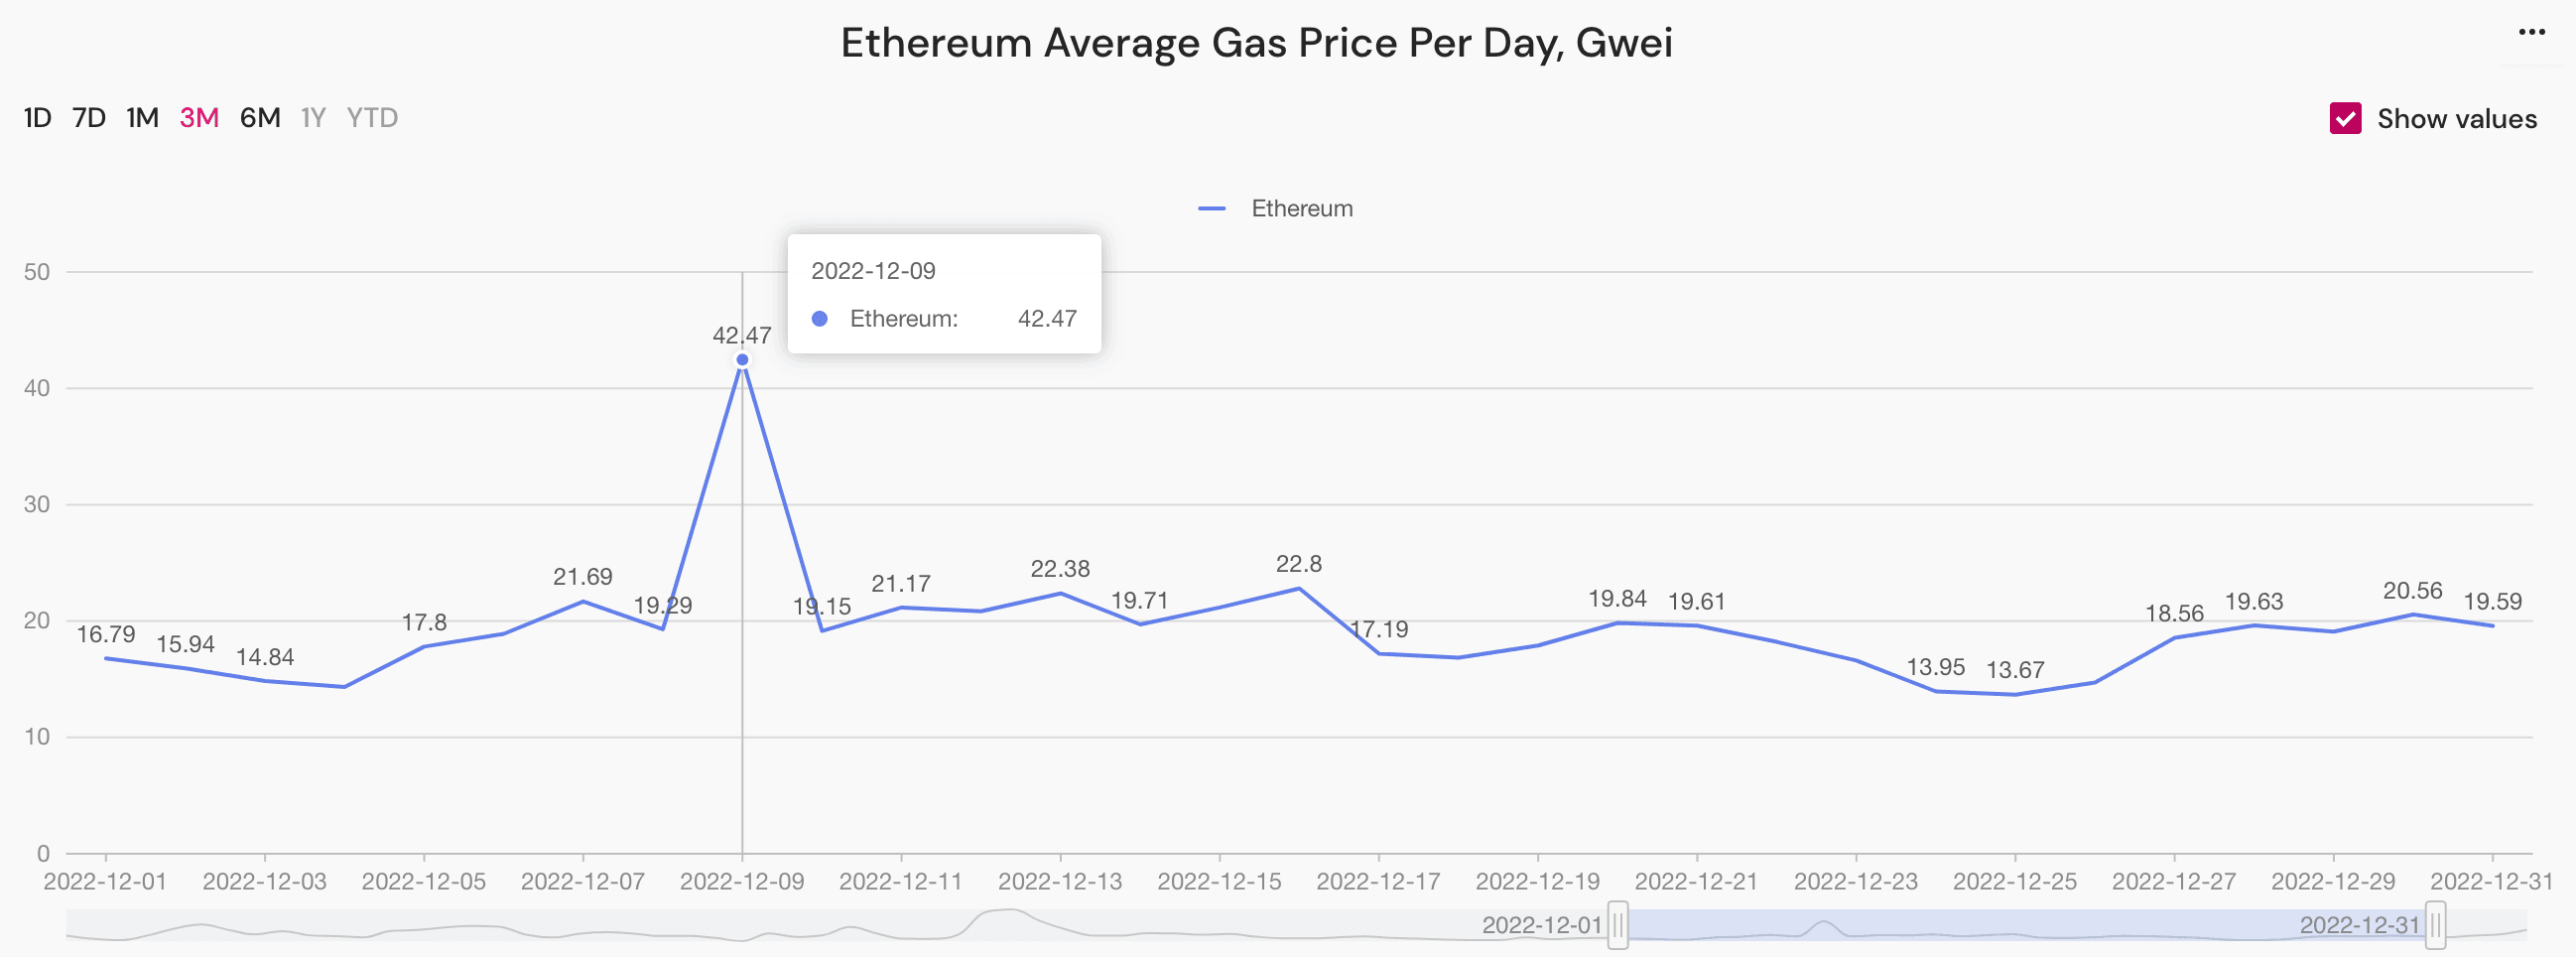 ethereum average gas price per day in December 2022